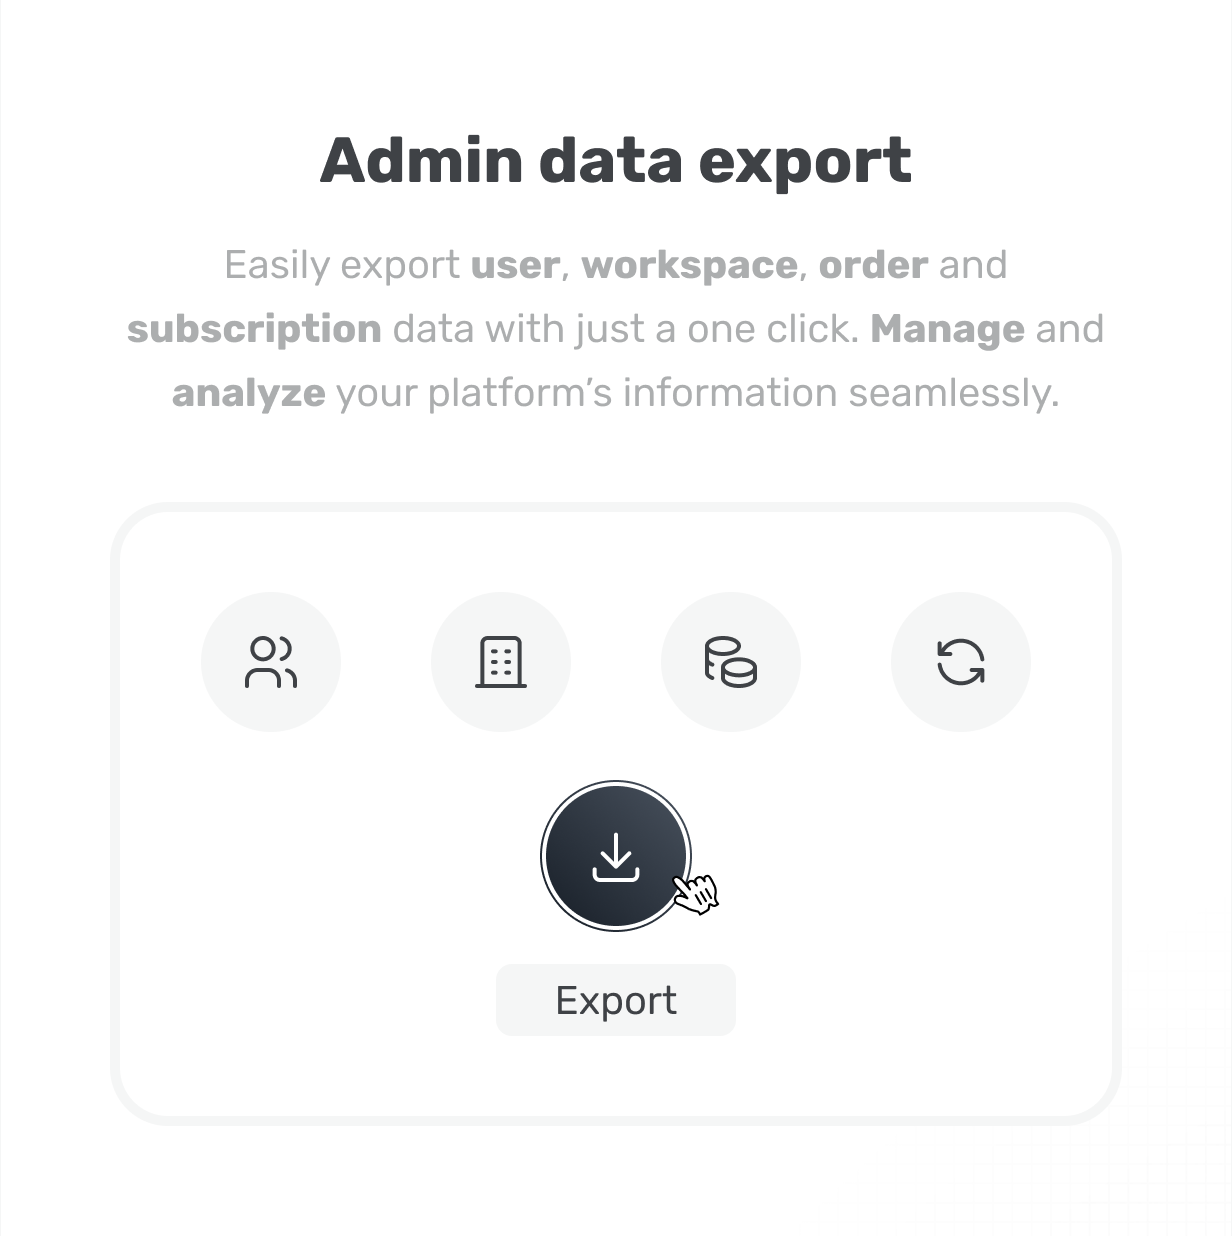 Export user, workspace, order subscription datas aikeedo @heyaikeedo